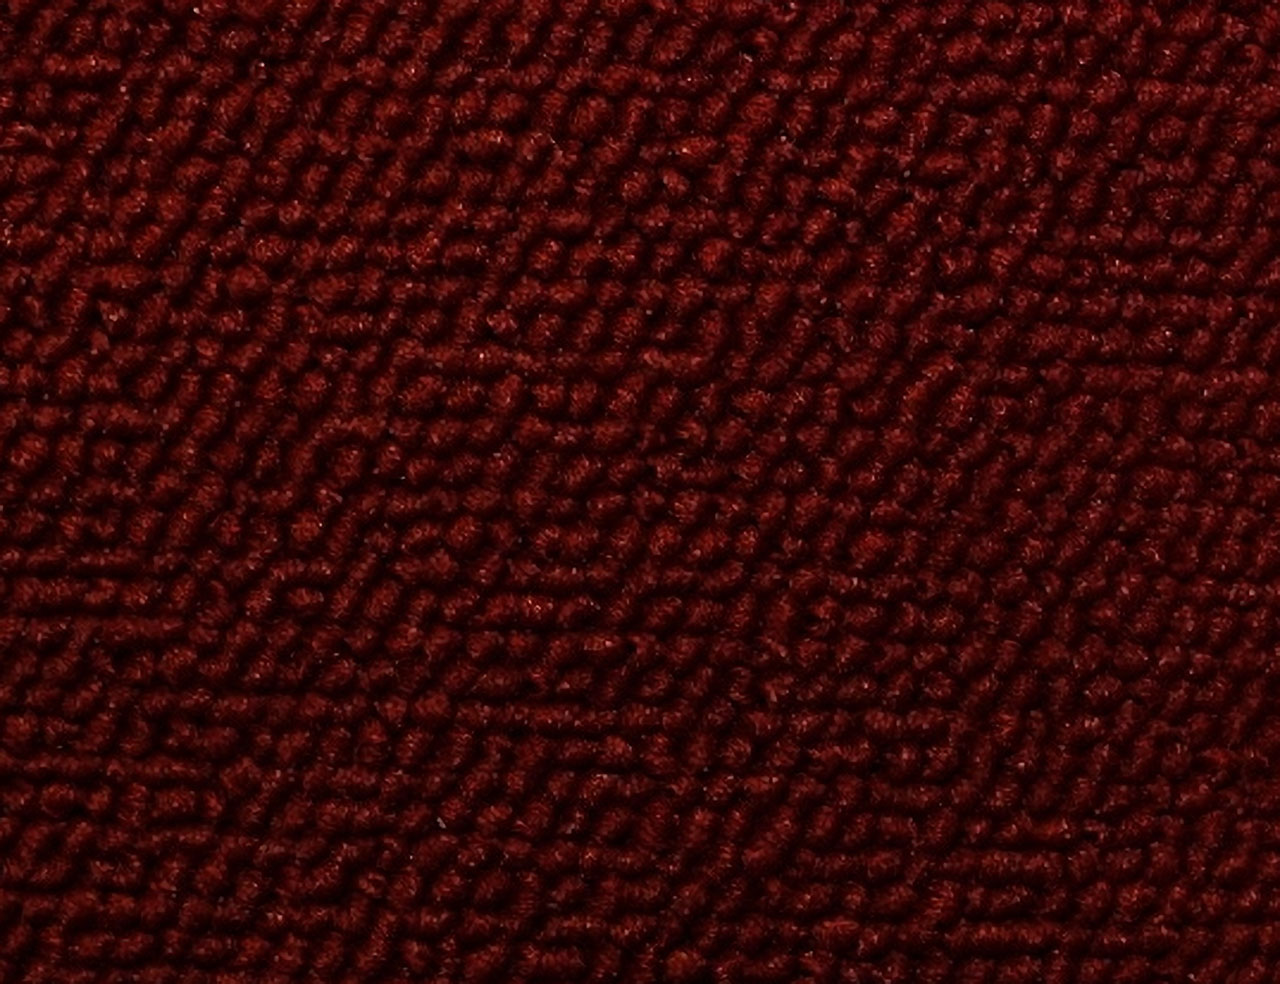 Holden Standard EJ Standard Panel Van B58 Bolero Red Carpet (Image 1 of 1)